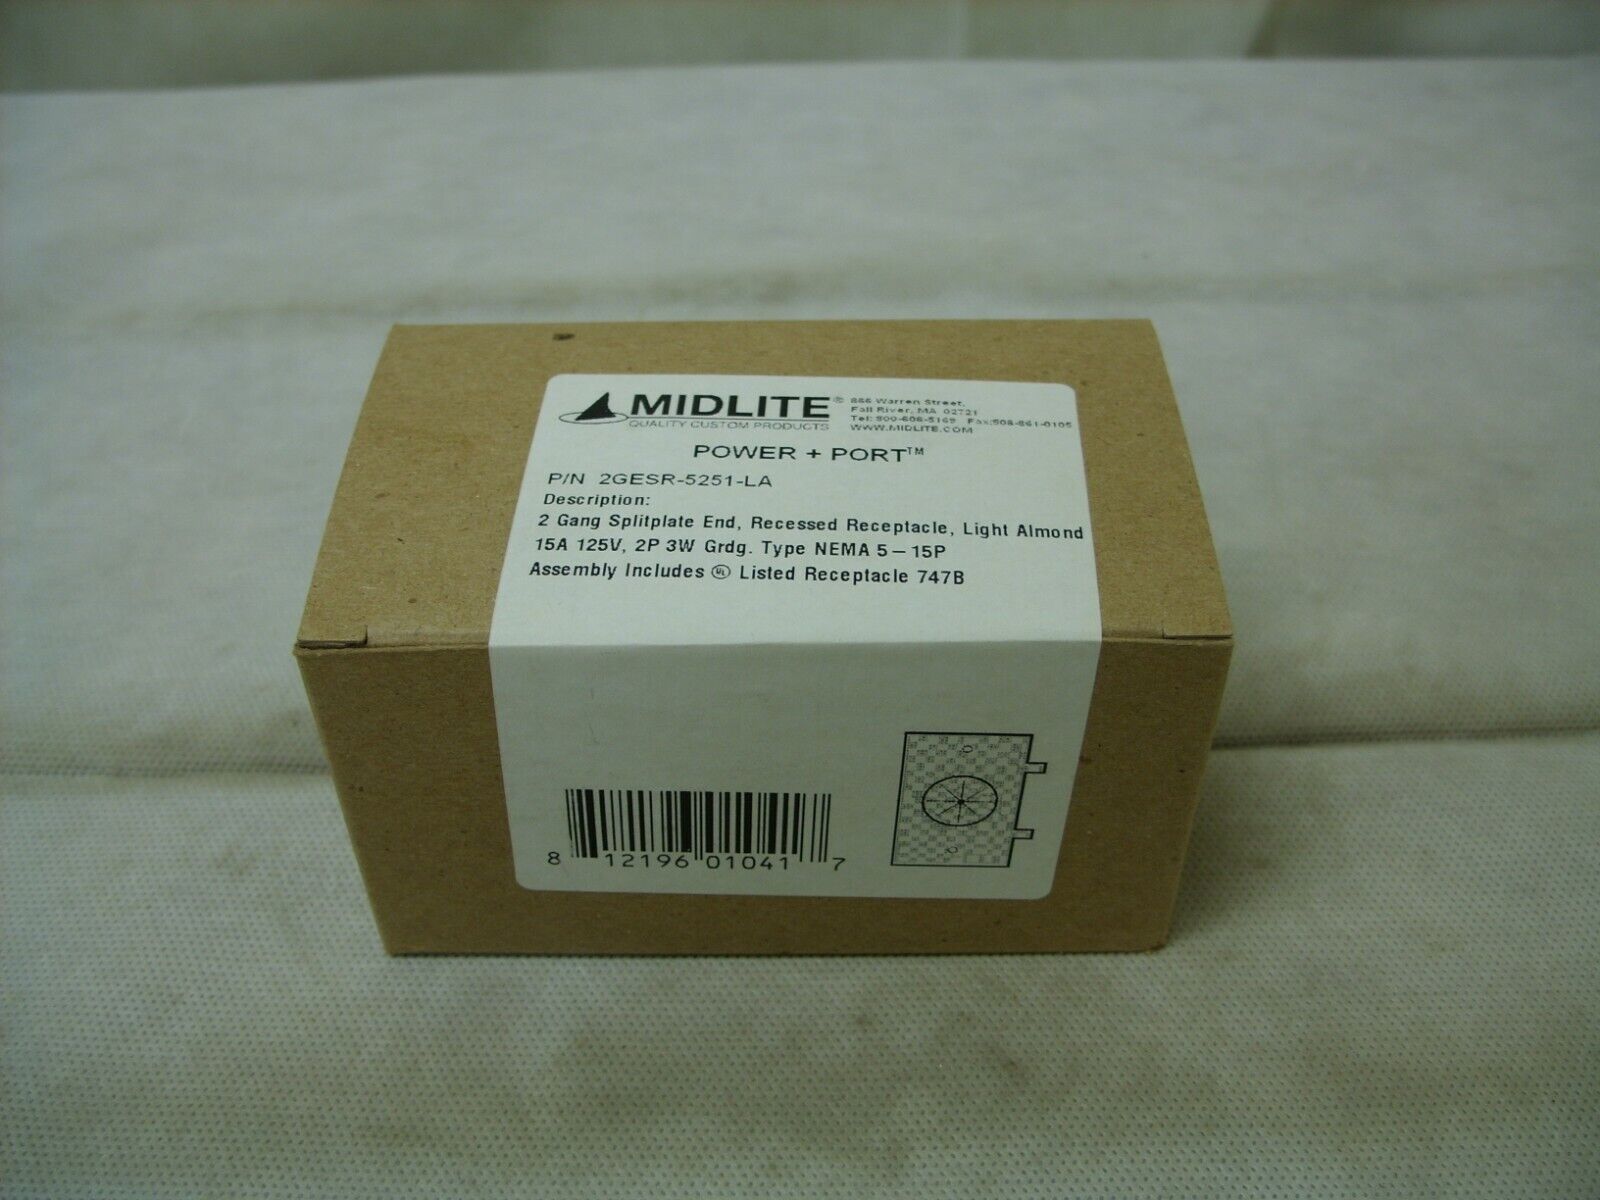 MIDLITE - Power + Port - 2 Gang Splitplate End Wall Receptacle - Light Almond